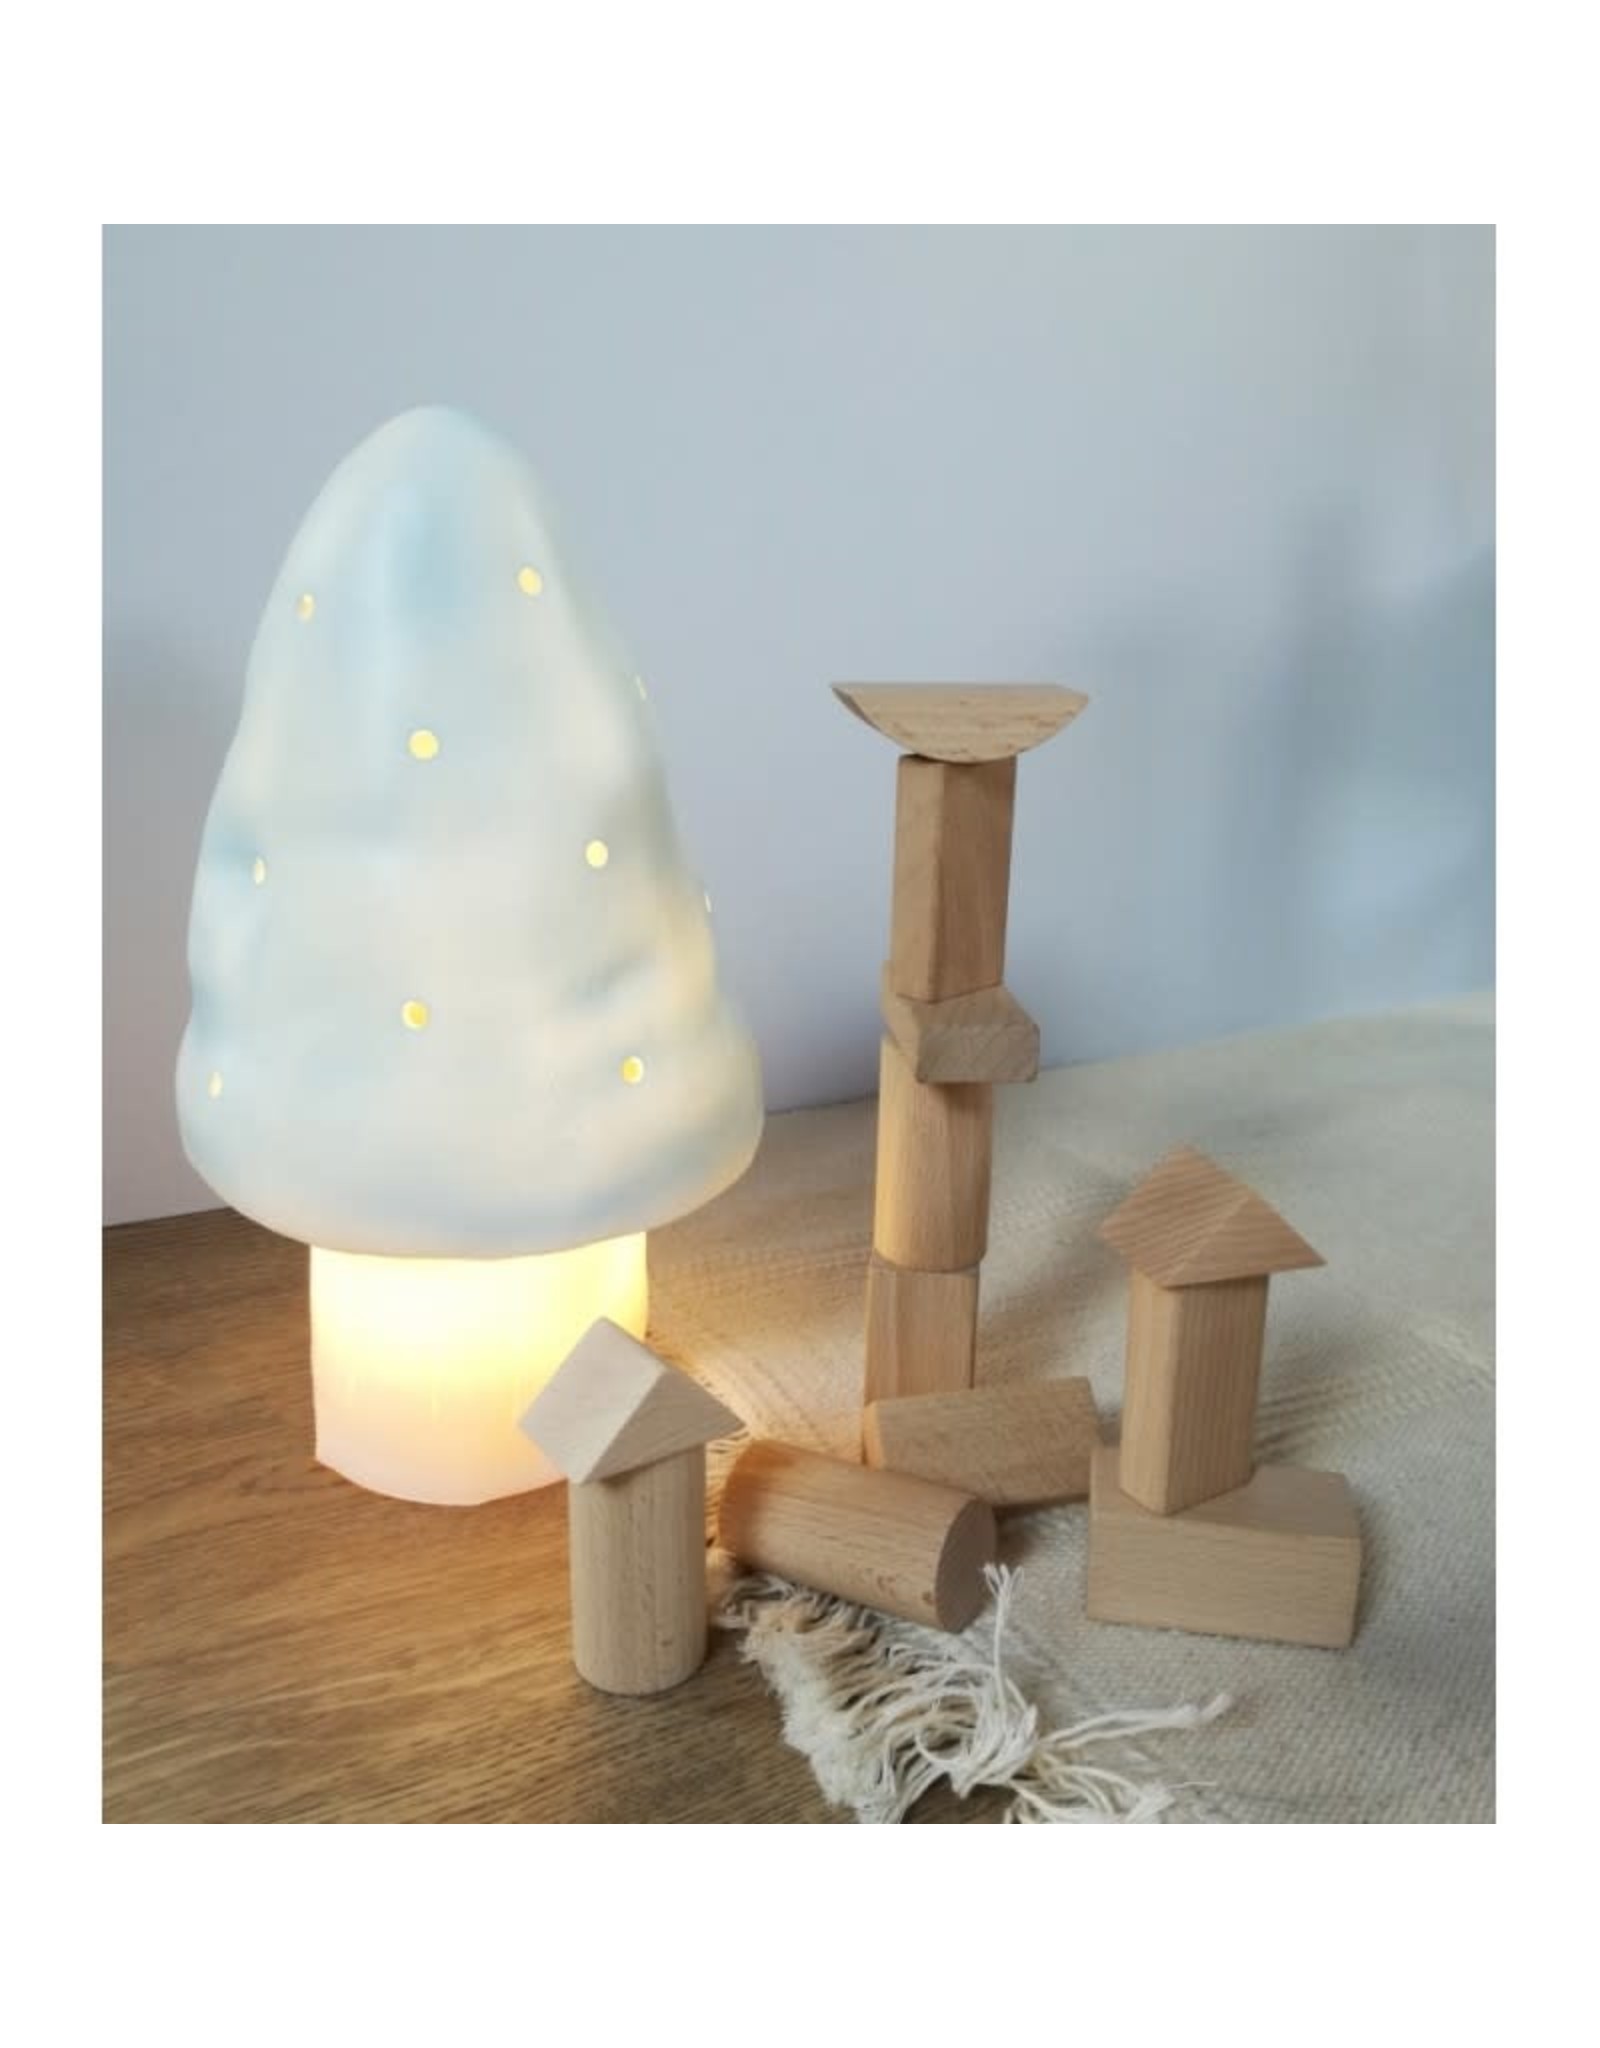 Egmont Toys Small Mushroom Lamp Blue